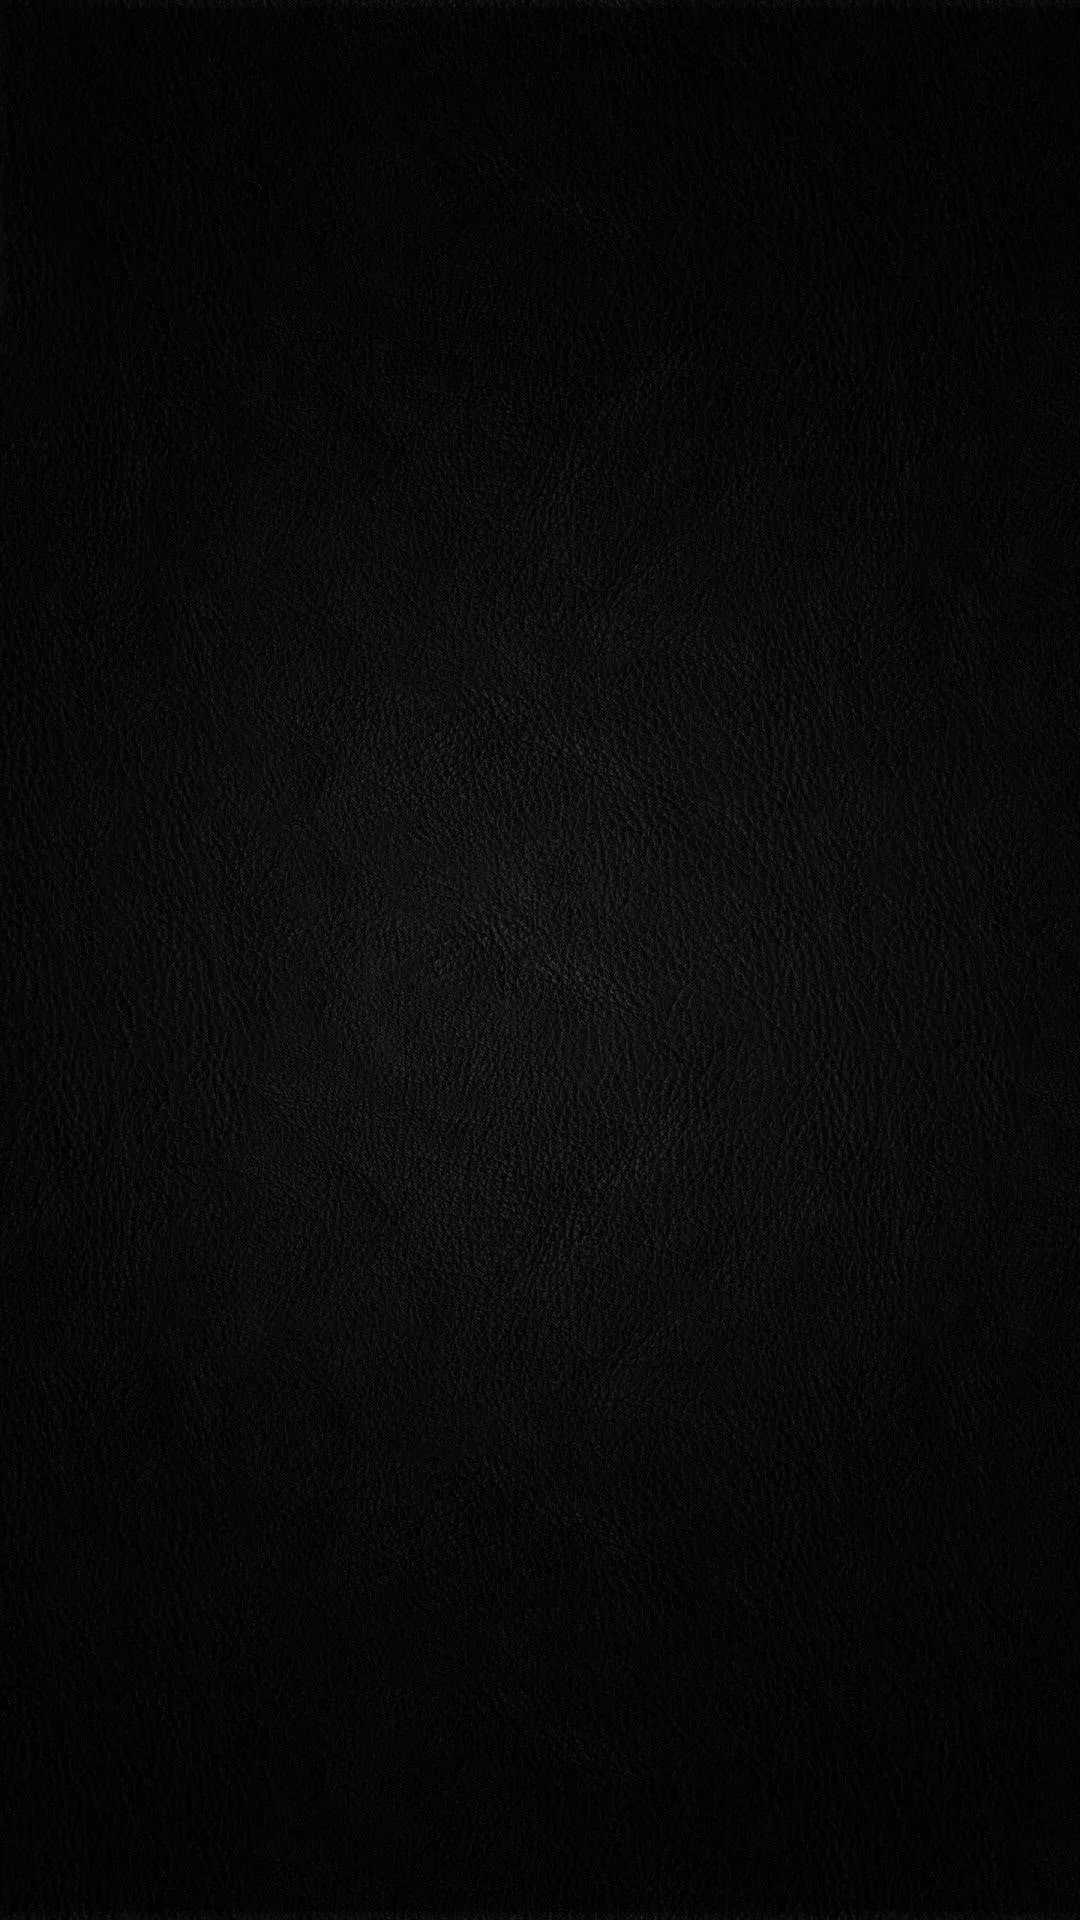 1080P Wallpaper Black Screen